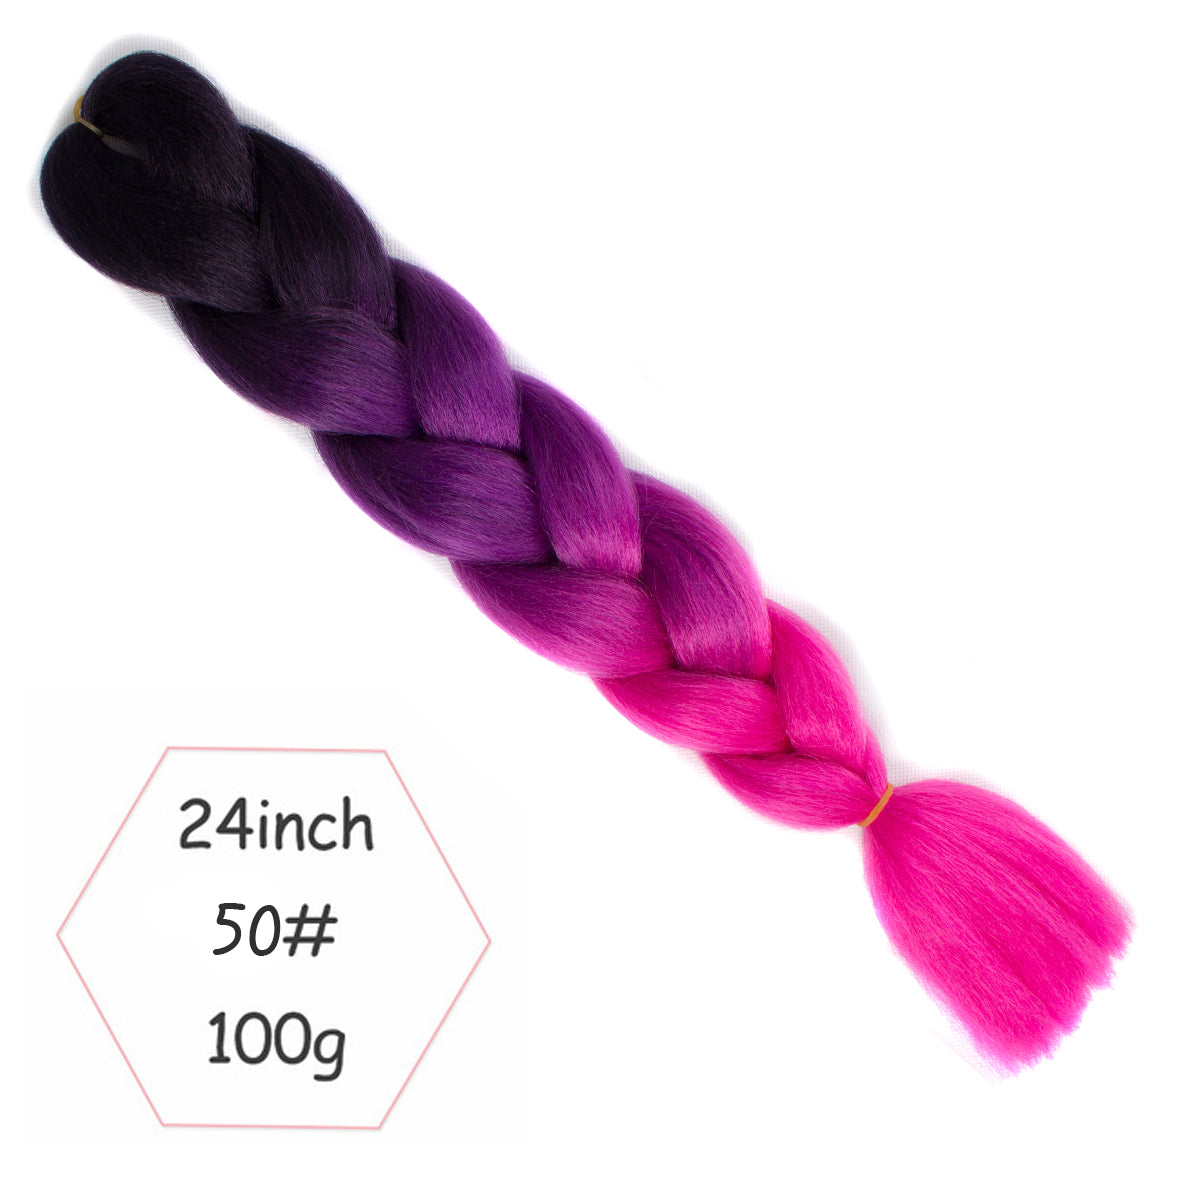 ombre three tone Synthetic Jumbo Crochet Braids Rainbow Kanekalon Colorful Braiding Hair Extensions